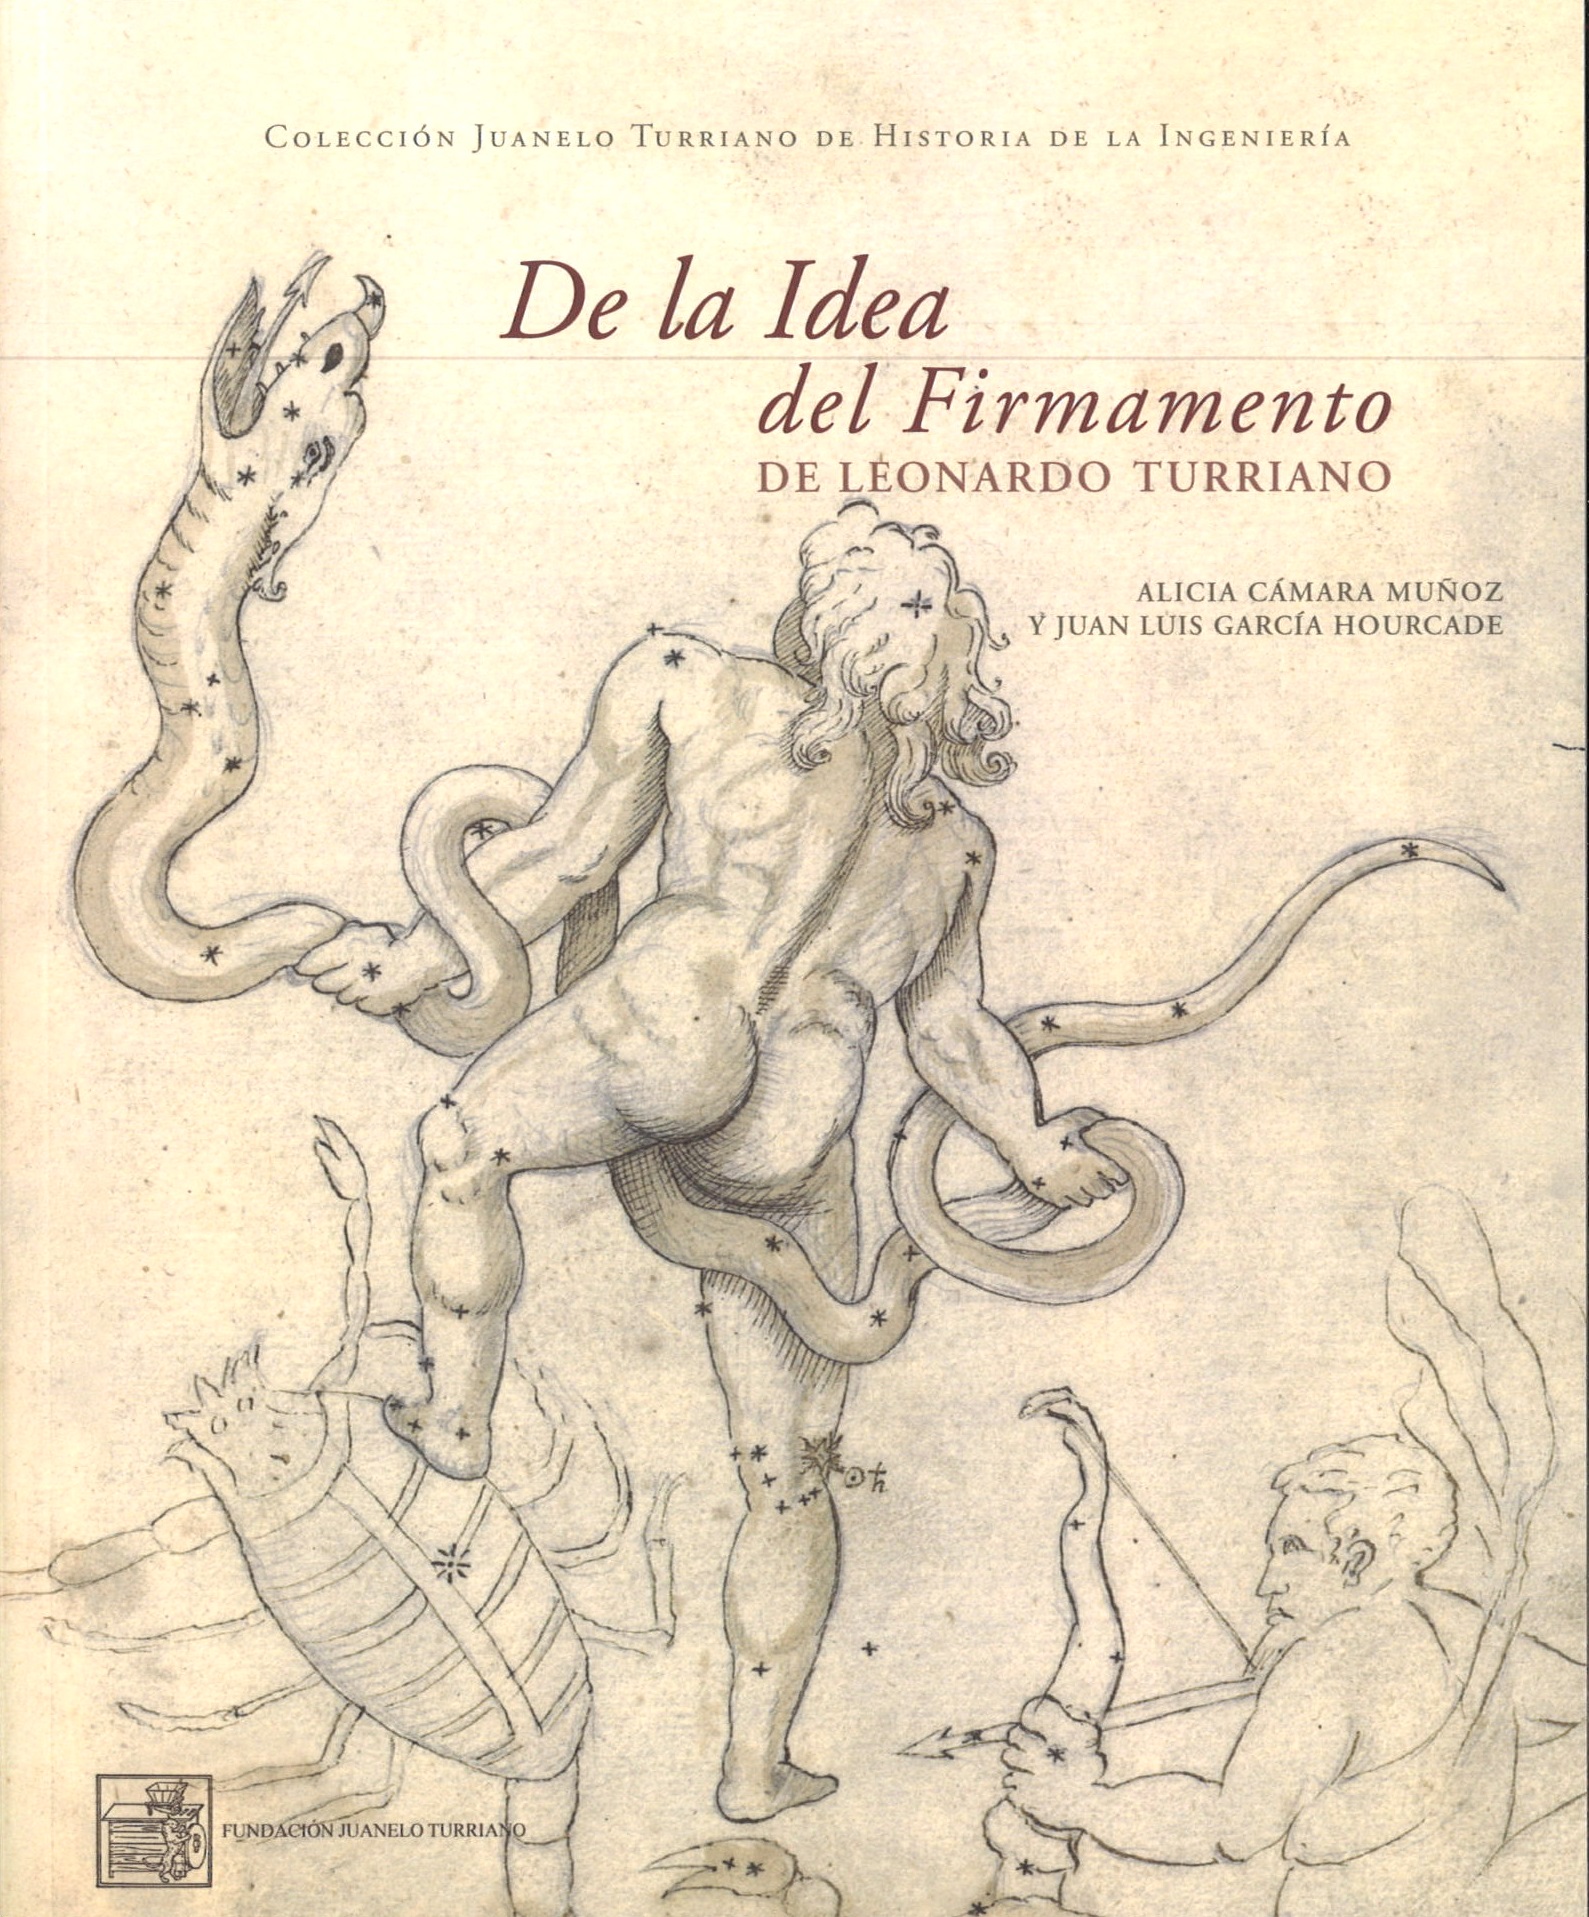 Leonardo Turriano’s On the firmament. New publication